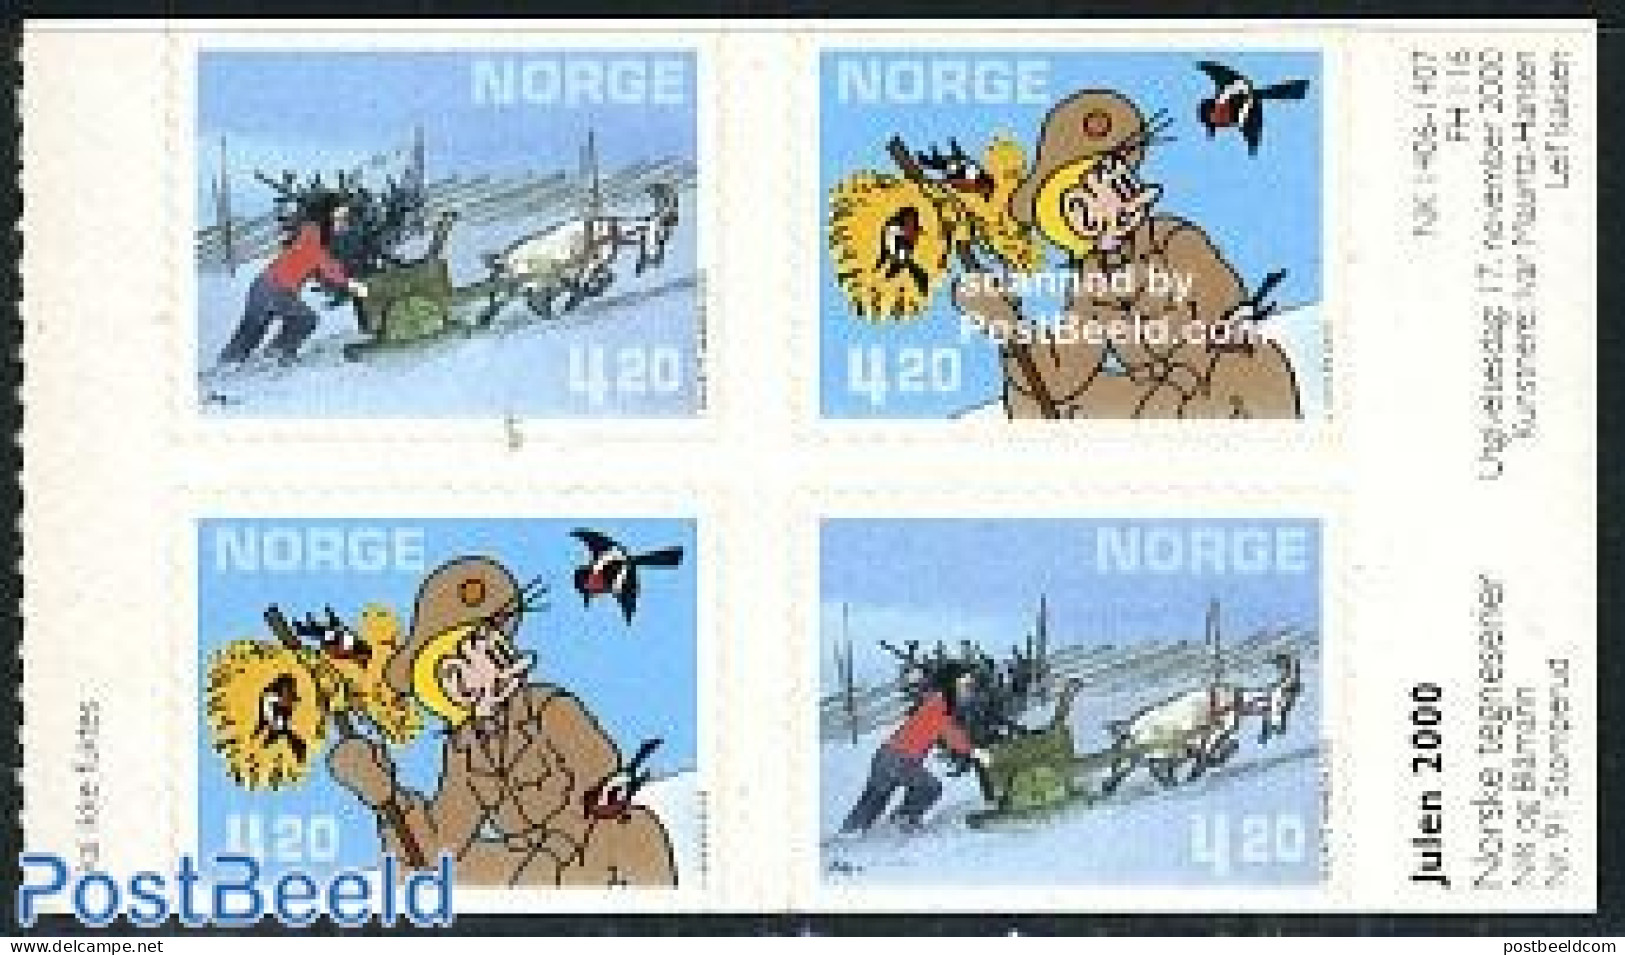 Norway 2000 Comics 2x2v S-a, Mint NH, Religion - Christmas - Art - Comics (except Disney) - Unused Stamps